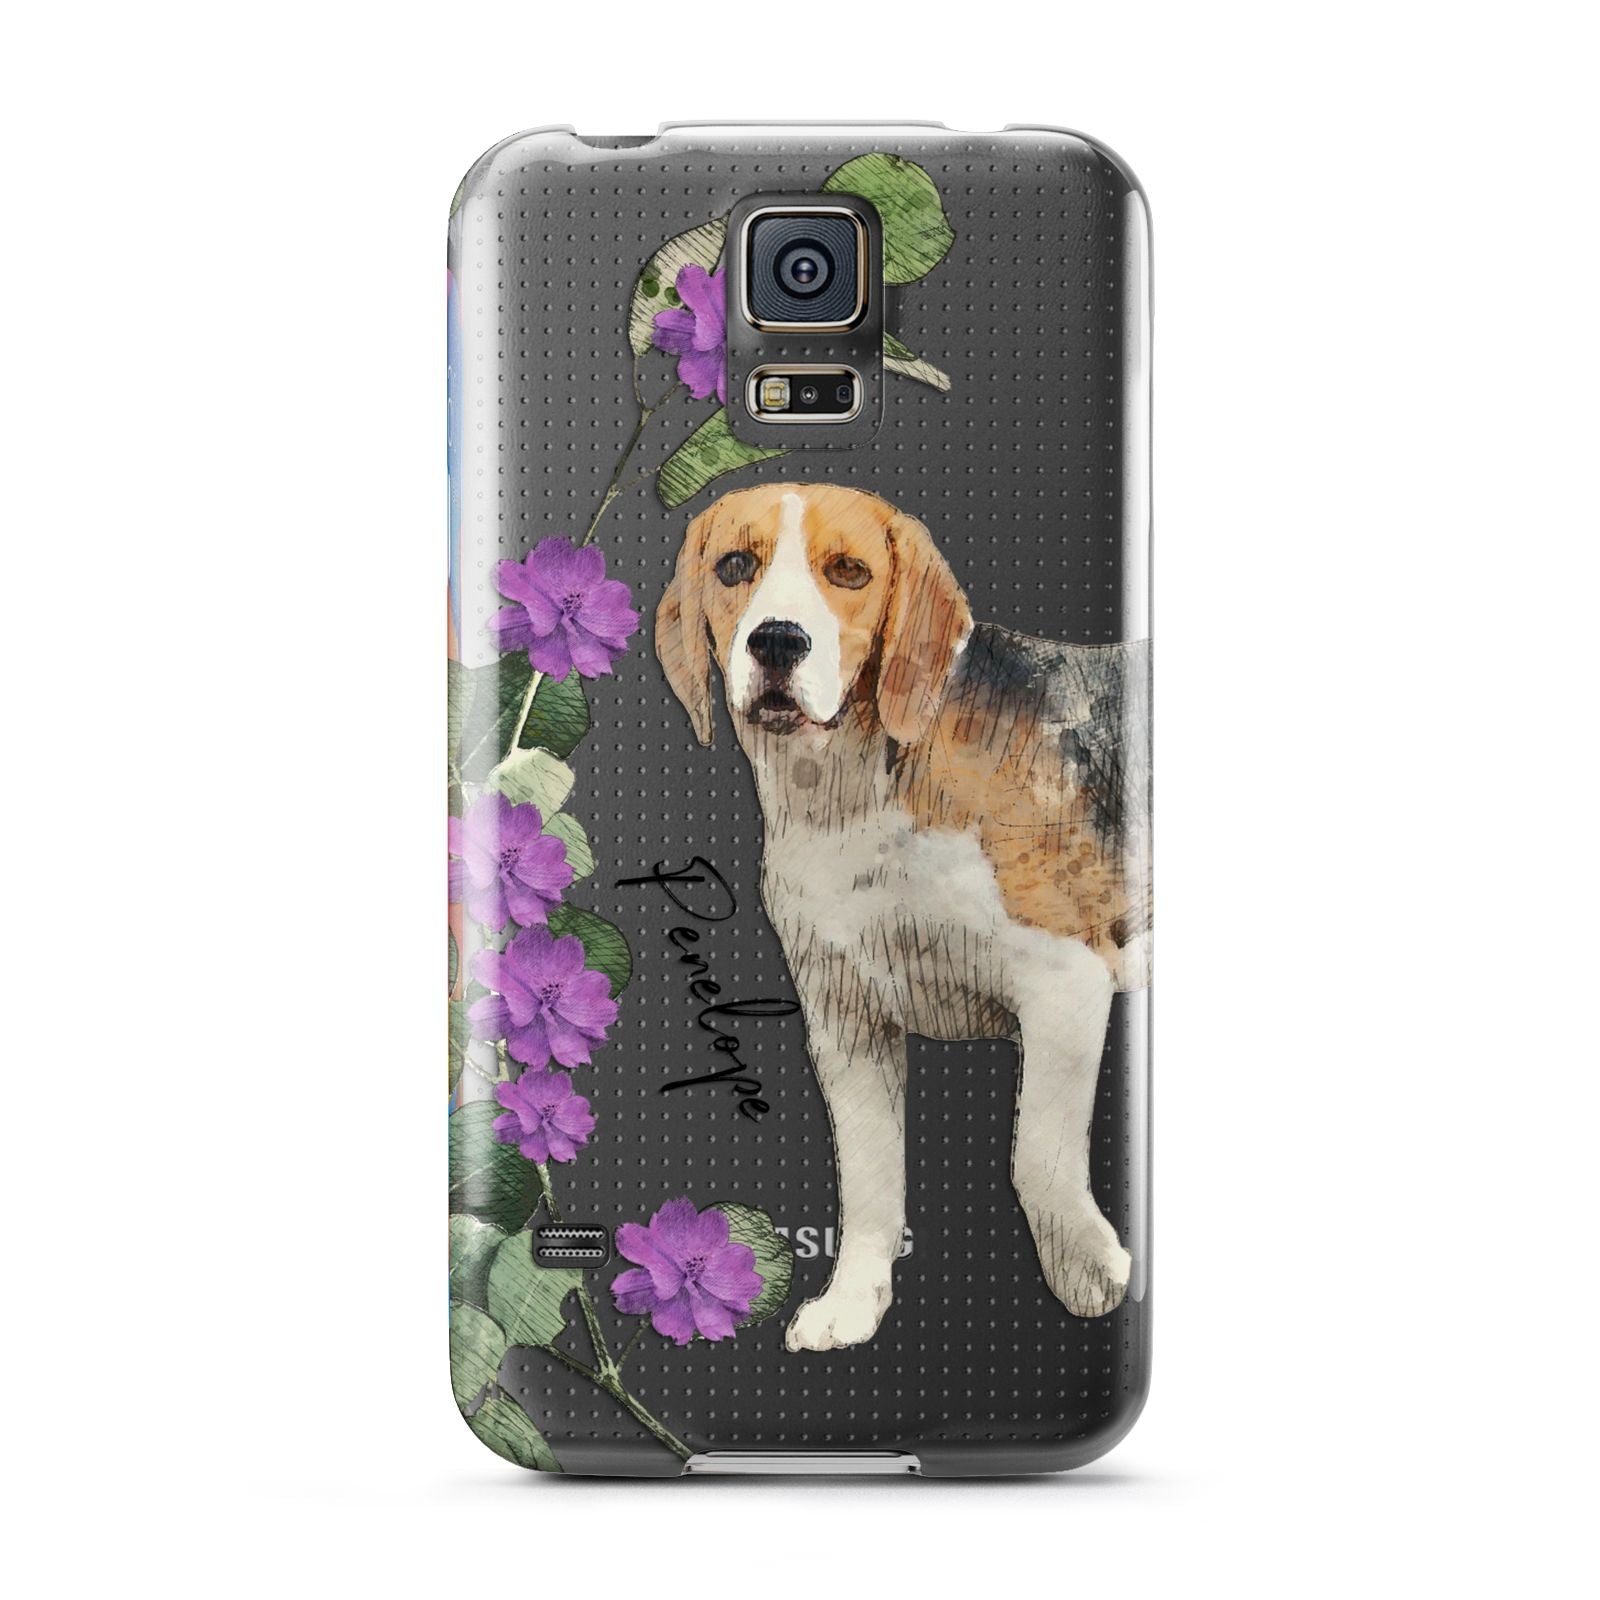 Personalised Dog Samsung Galaxy S5 Case